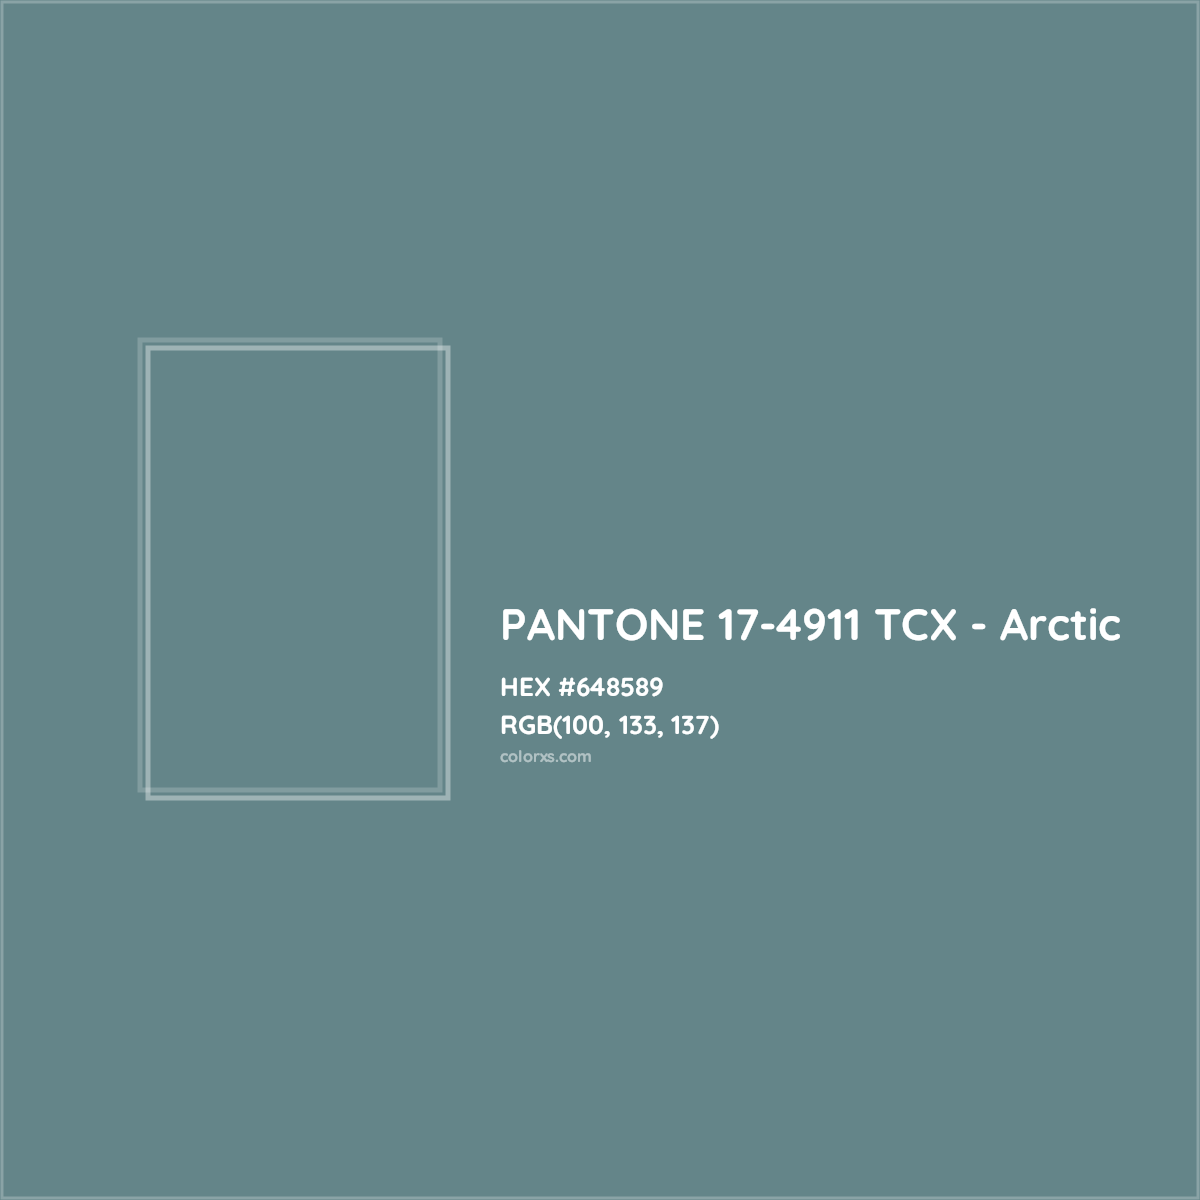 HEX #648589 PANTONE 17-4911 TCX - Arctic CMS Pantone TCX - Color Code